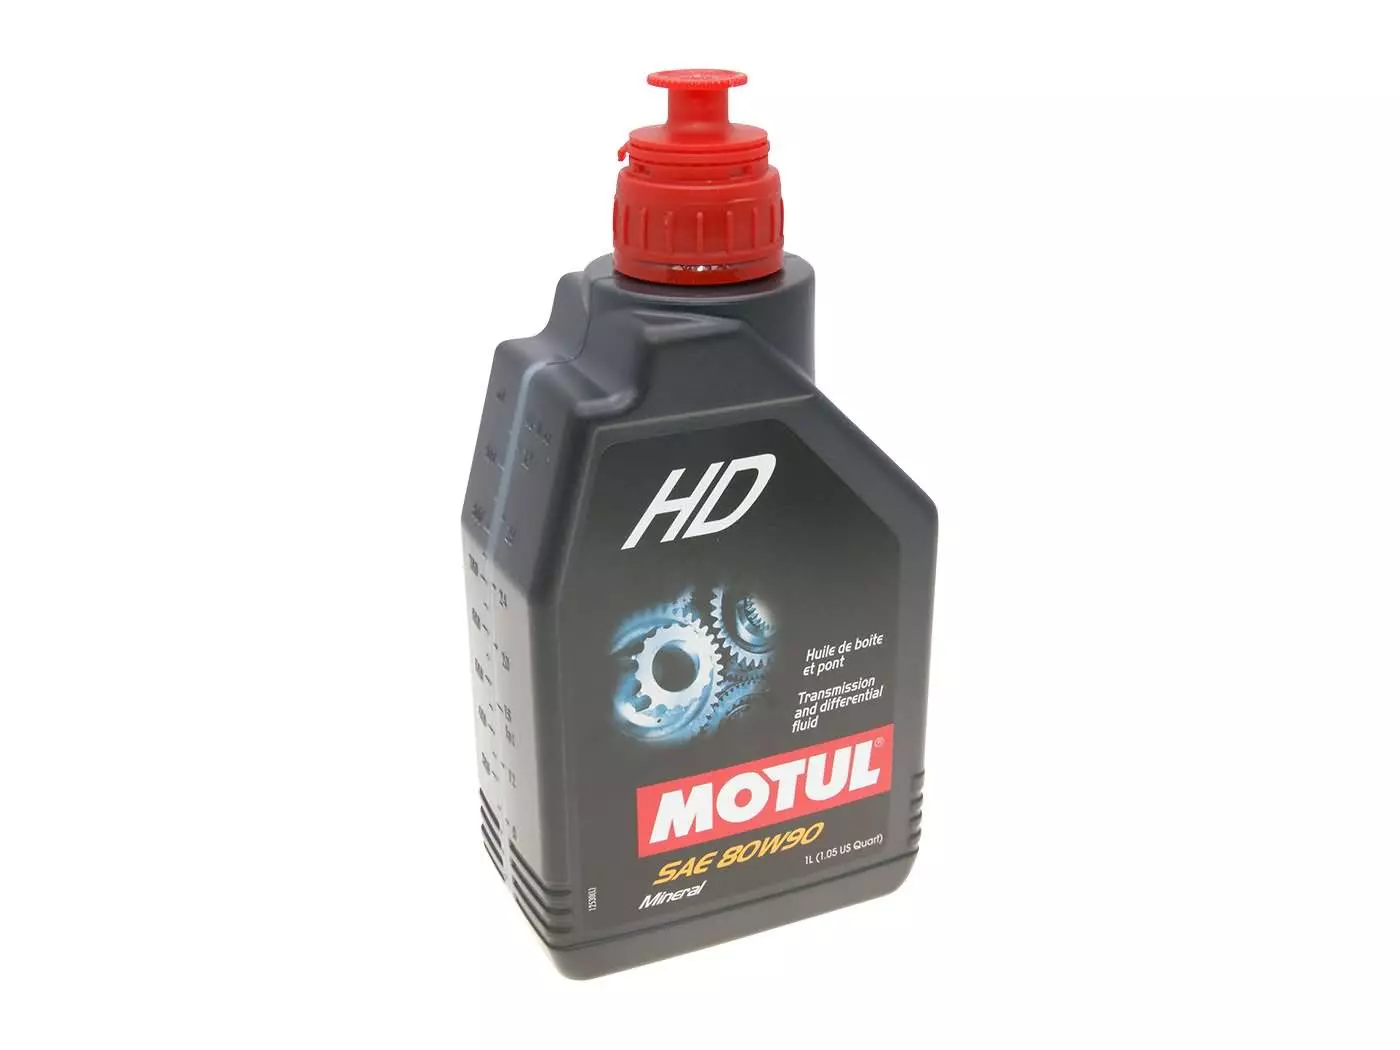 Motul Transmission Oil HD Transmission And Differential Fluid 80W90 1 Liter